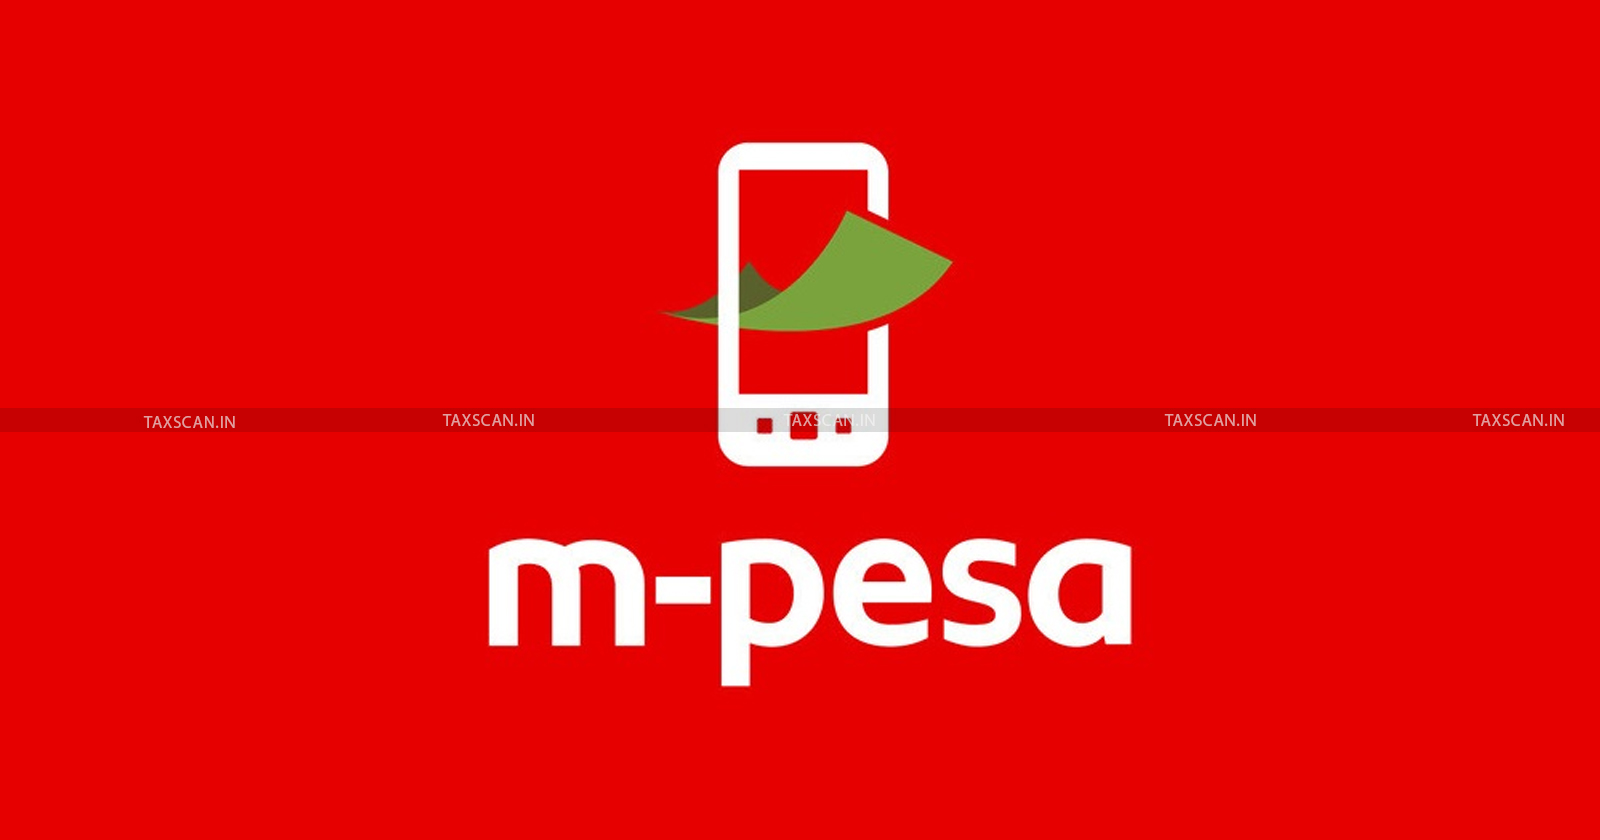 Taxpayer Operating - Money Transfer Business - M-Pesa - Mobile Wallets Evident - Bank Statement - ITAT - Re-Adjudication - taxscan